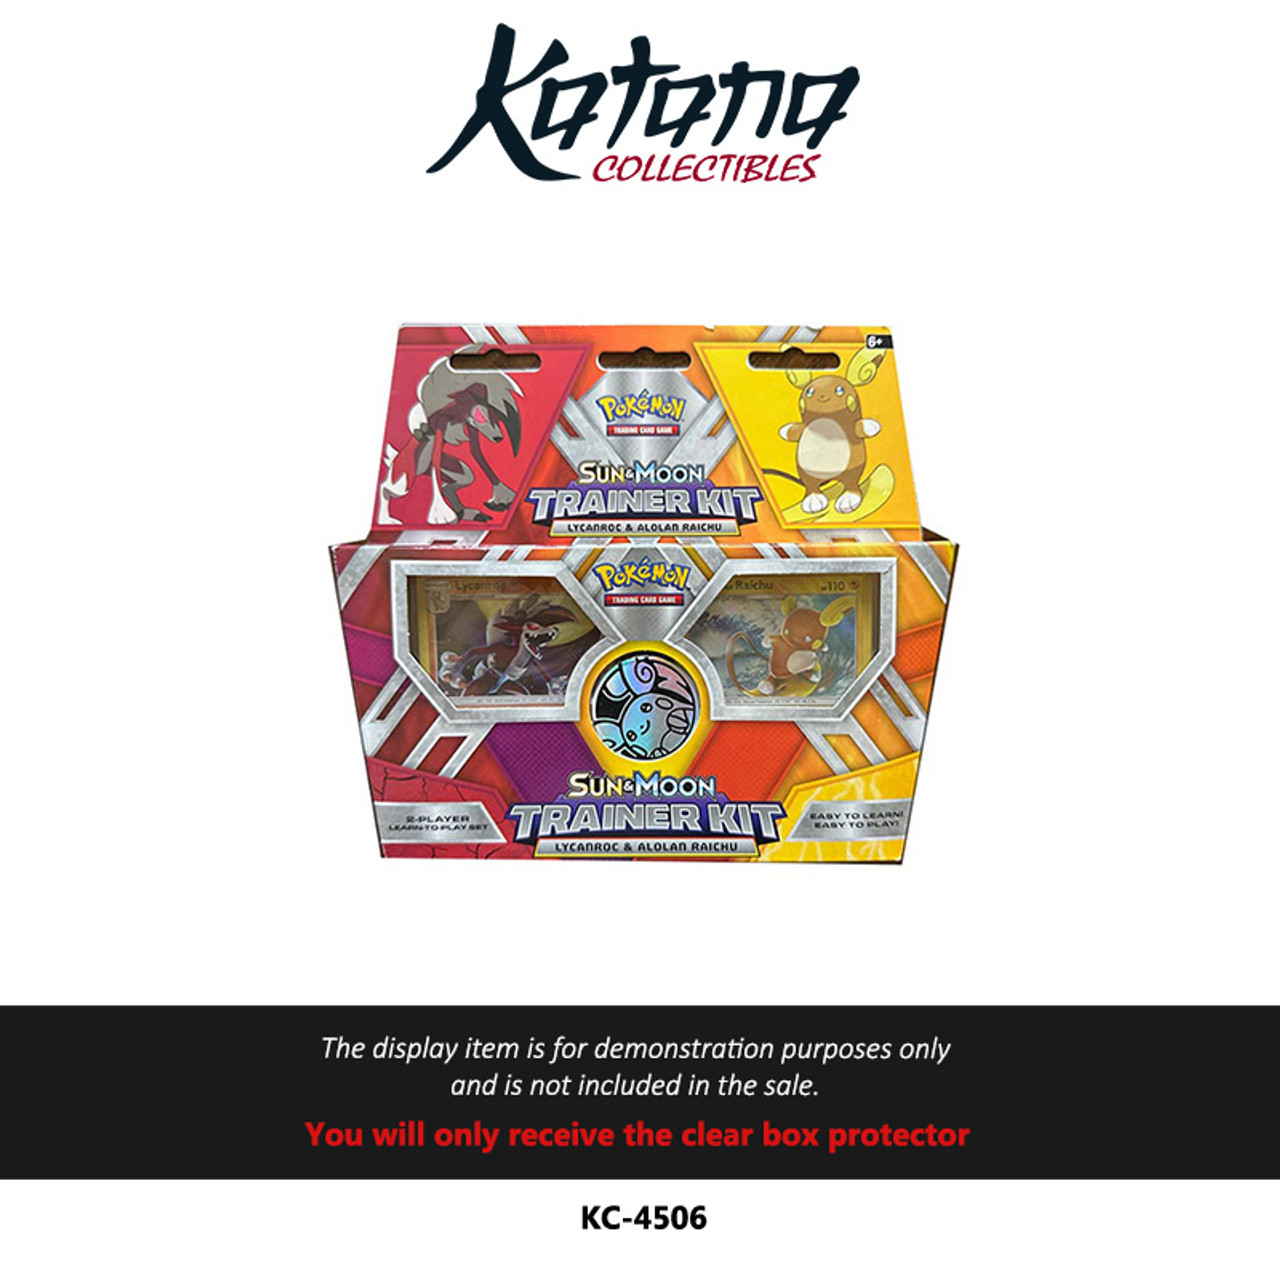 Katana Collectibles Protector For Pokémon Sun & Moon Trainer Kit